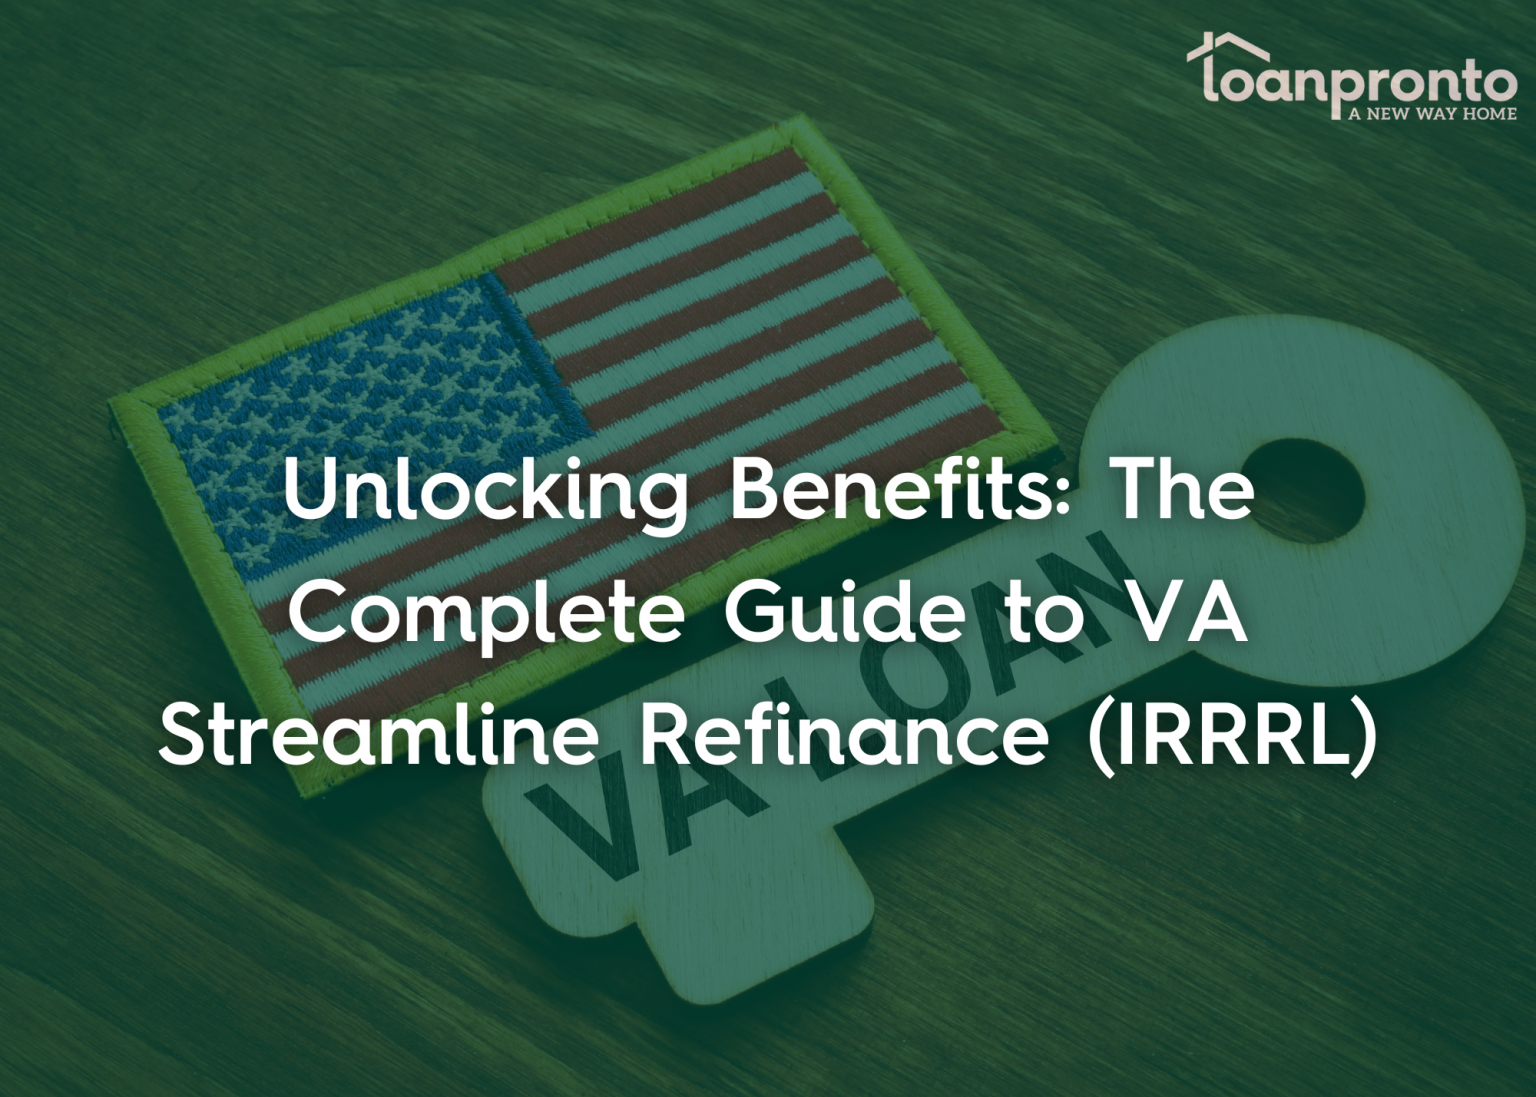 veteran VA streamline refinance, VA IRRRL, pros, cons, how it works, eligibility